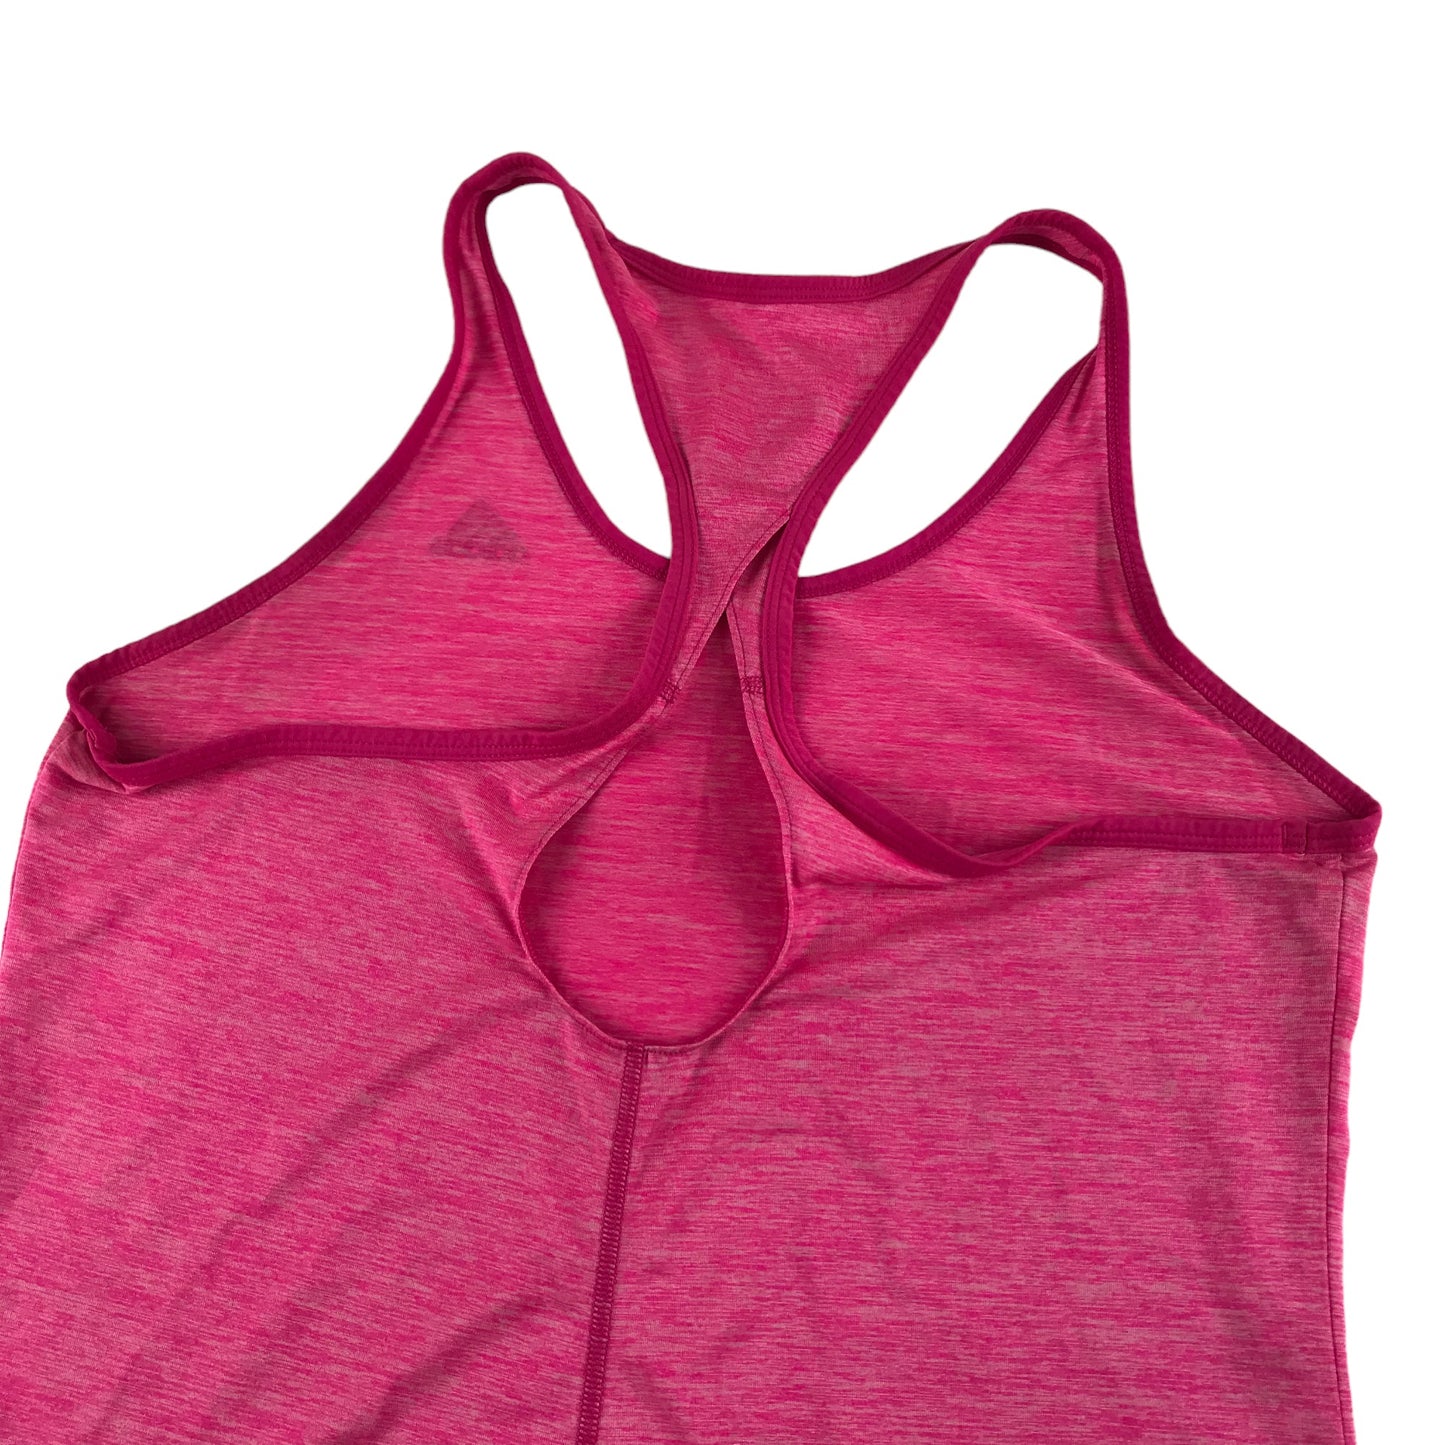 Adidas Sports Top Size Medium Women's 12-14 Pink Tank Top Climalite